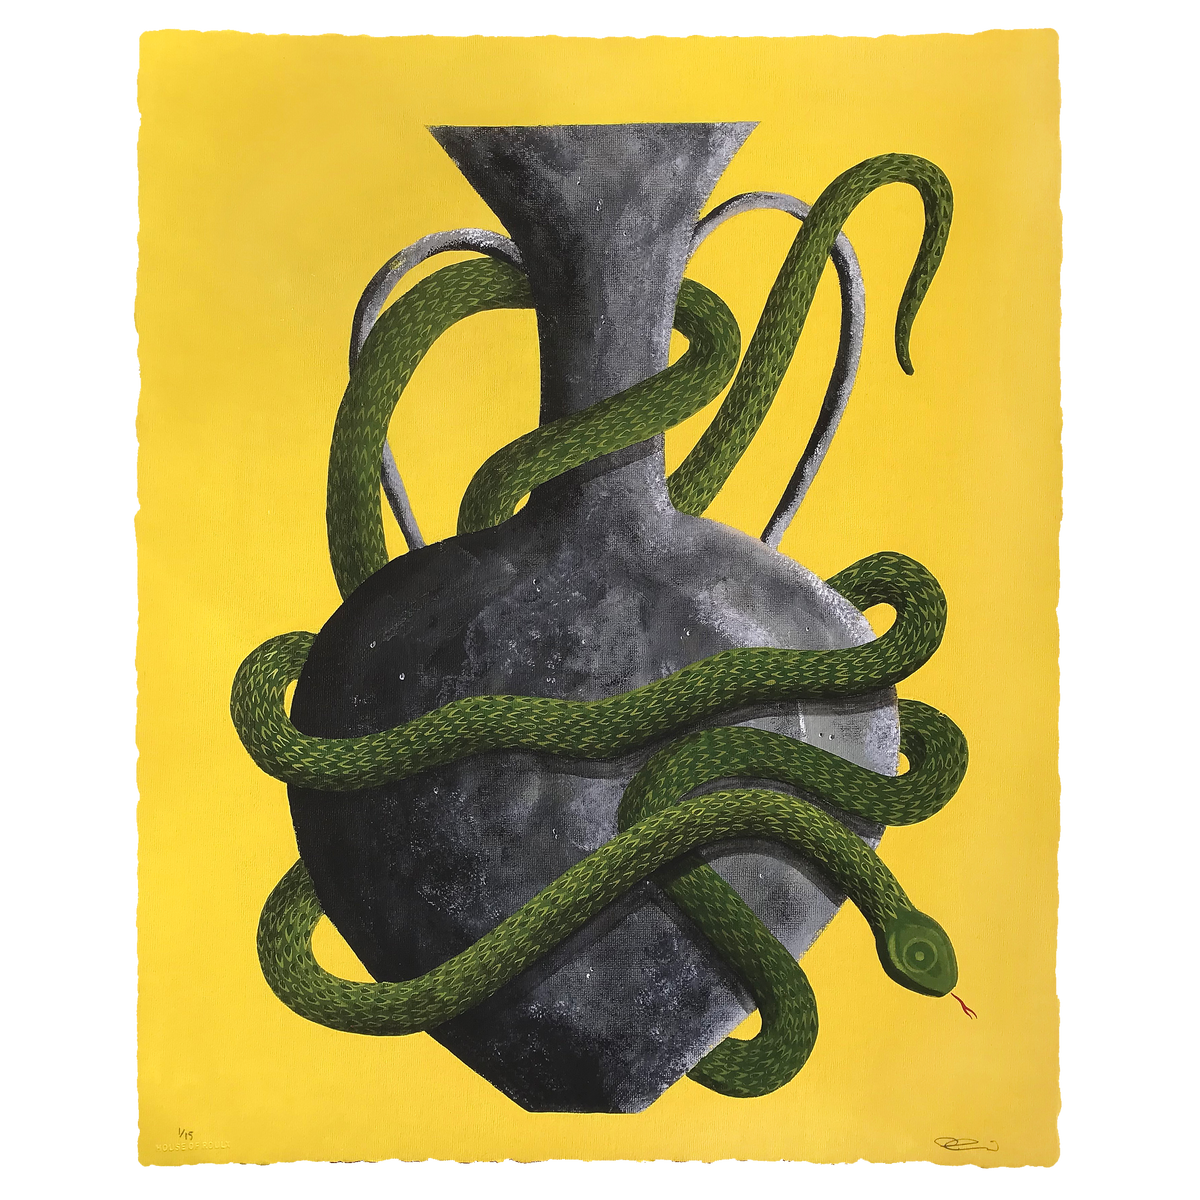 Rich Cali &quot;Cement Vessel w Snake 2&quot; - Archival Print, Limited Edition of 15 - 16 x 20&quot;